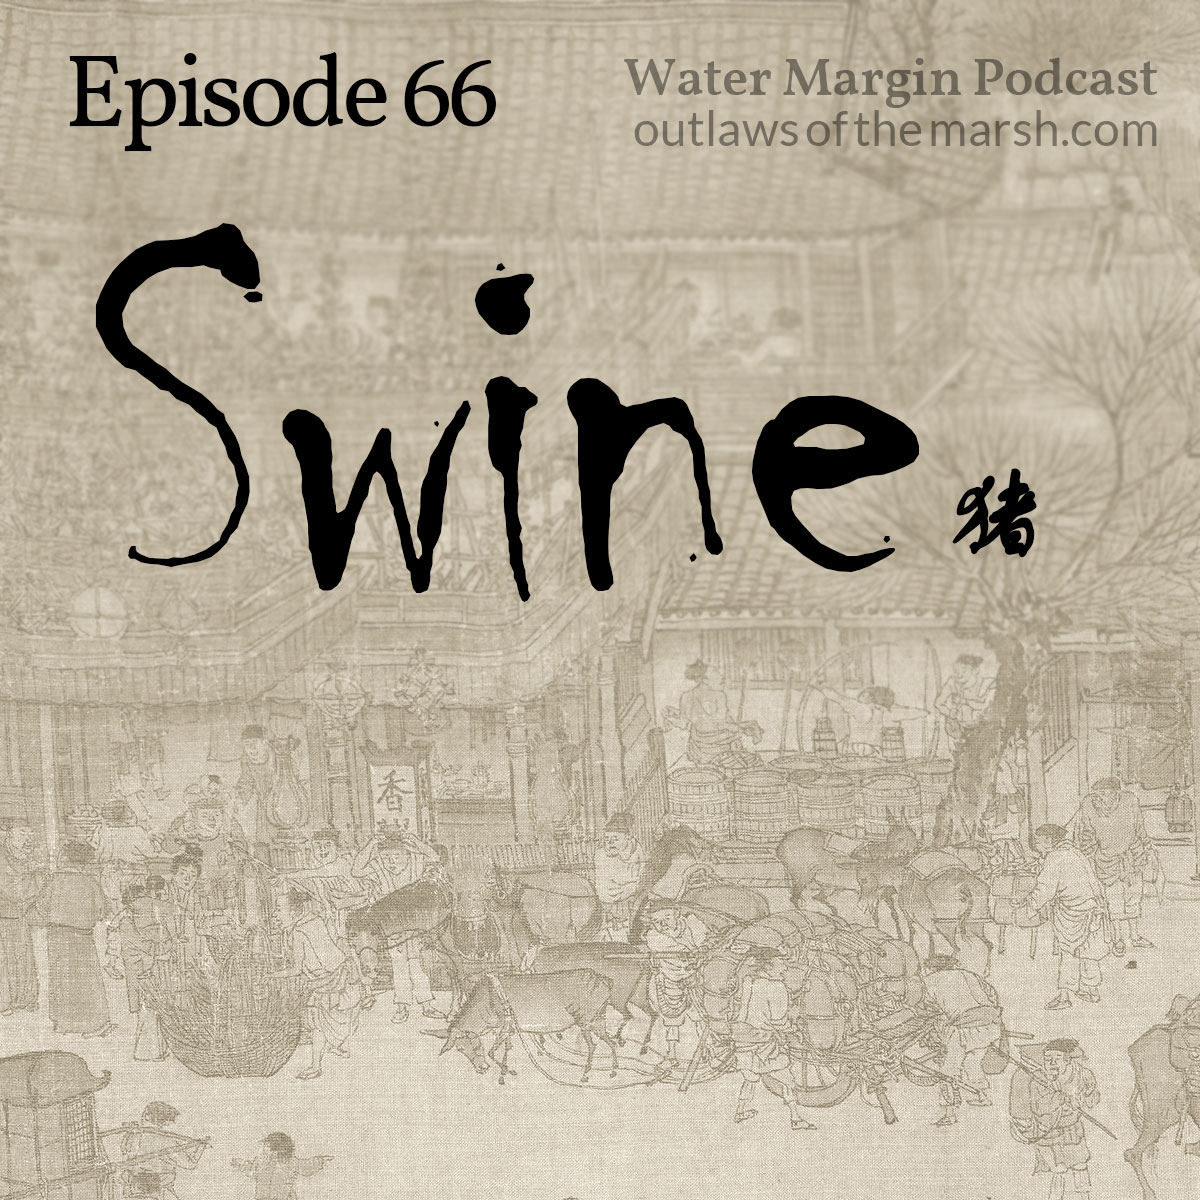 Water Margin Podcast: Episode 066